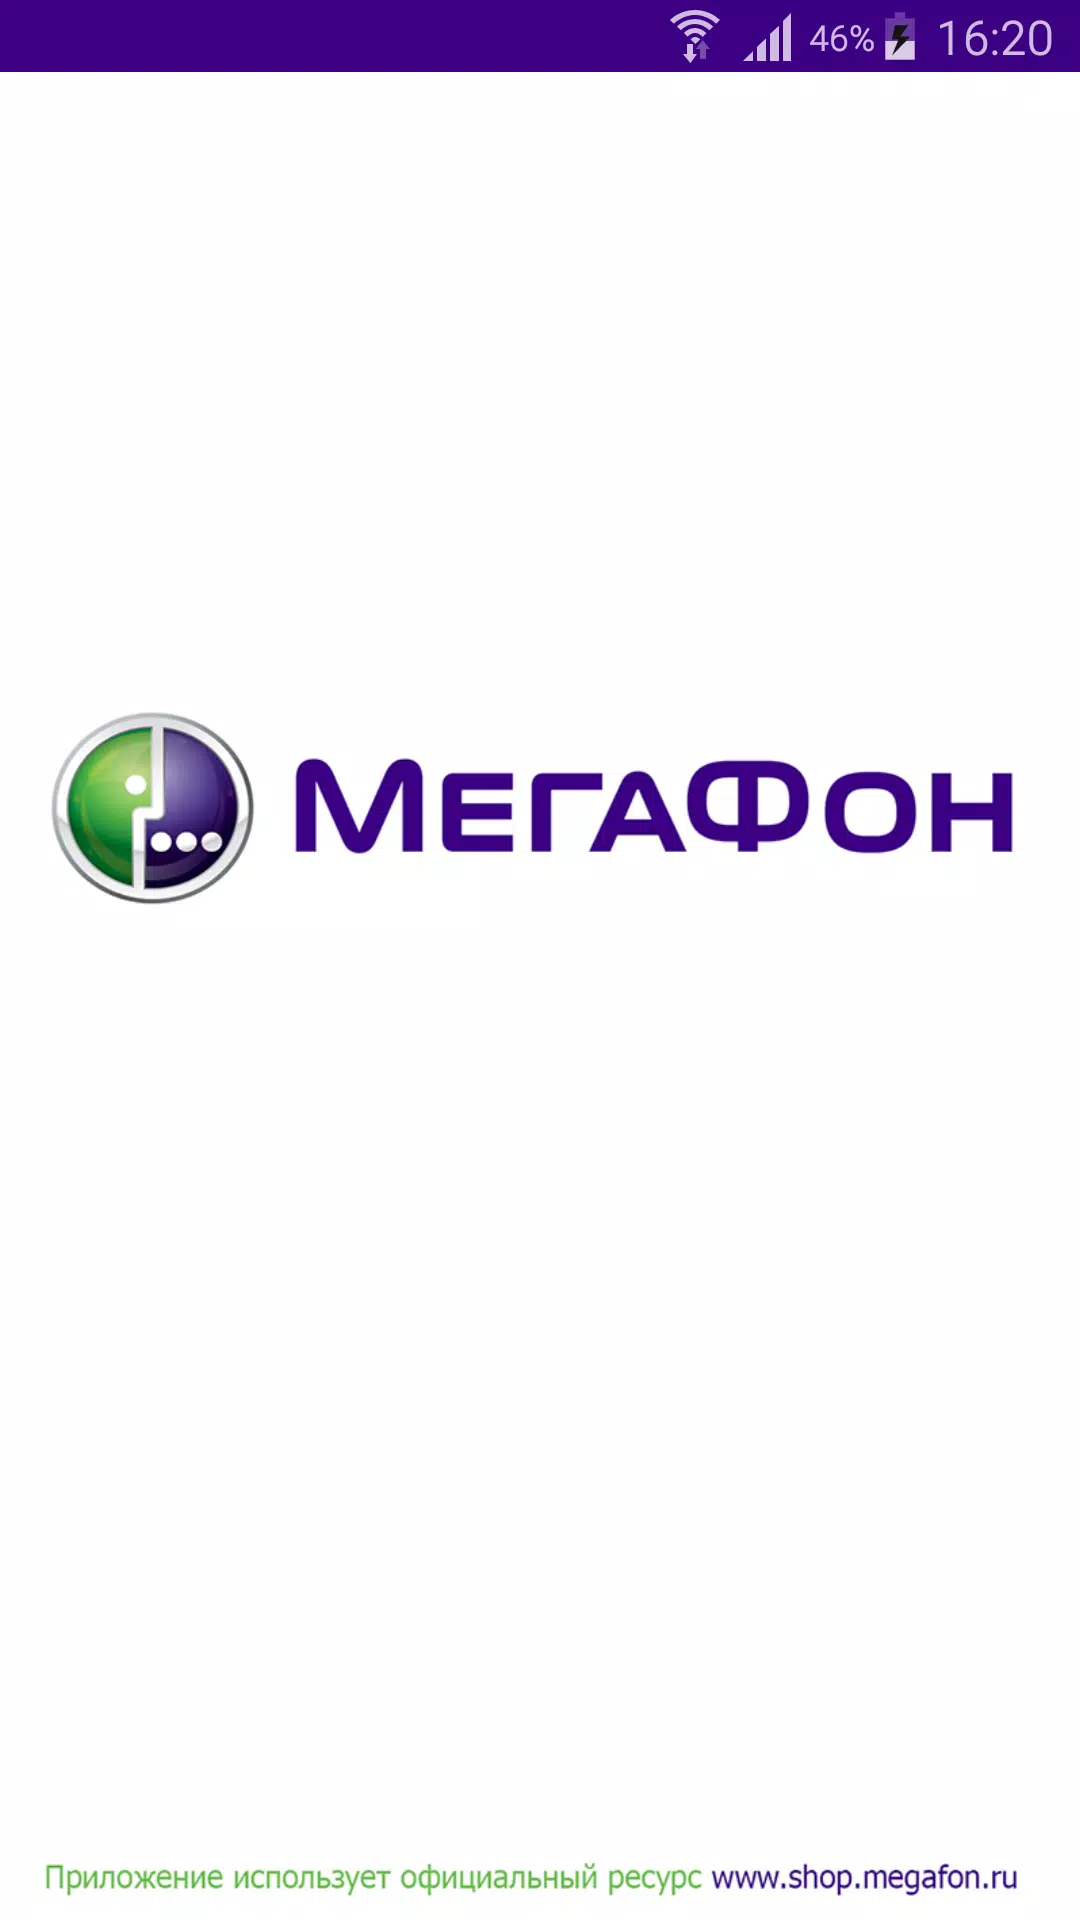 Megafon интернет магазин APK for Android Download